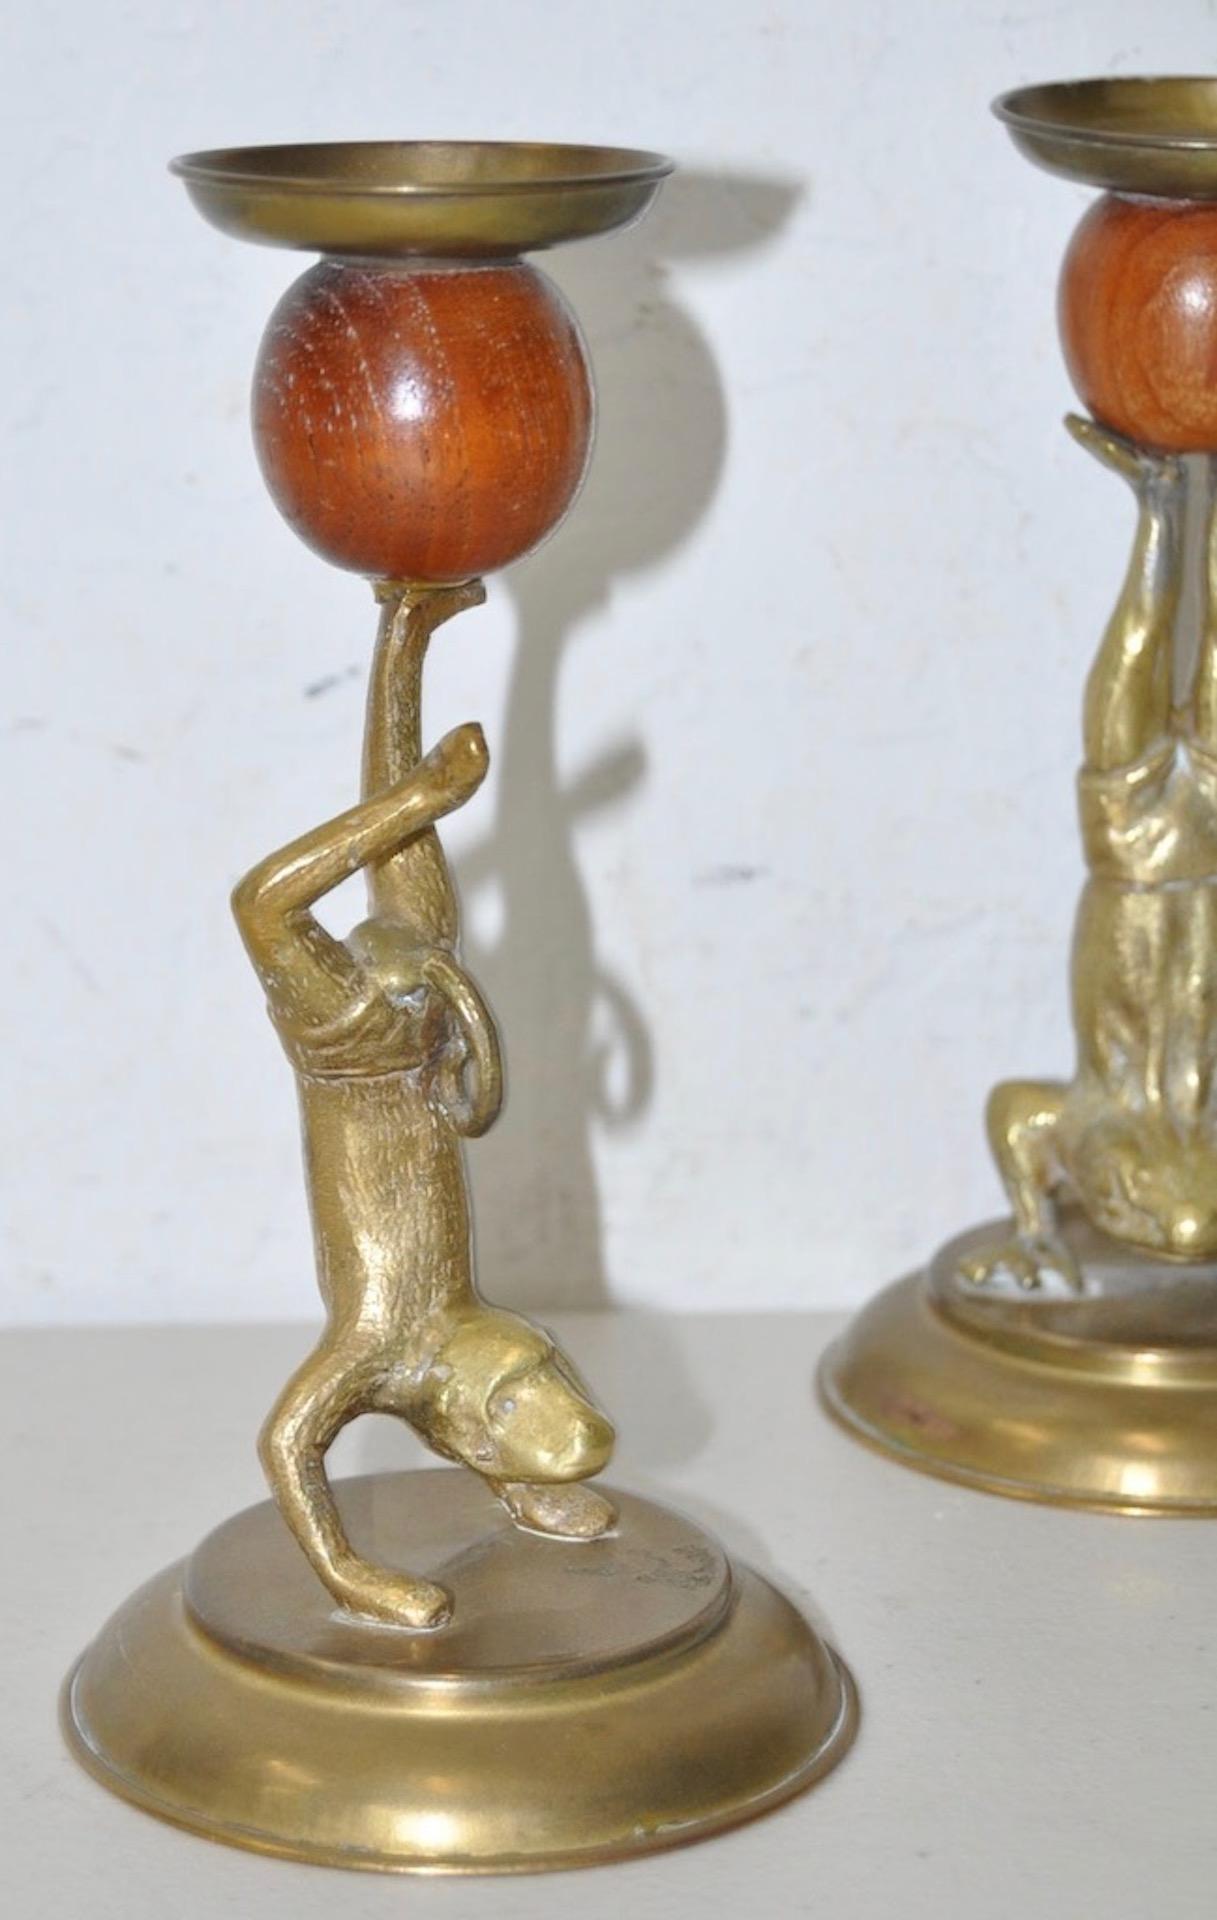 Arthur Court vintage brass and teak candlesticks, circa 1978

Pair of playful acrobatic frog candlesticks.

Dimensions 3 3/4